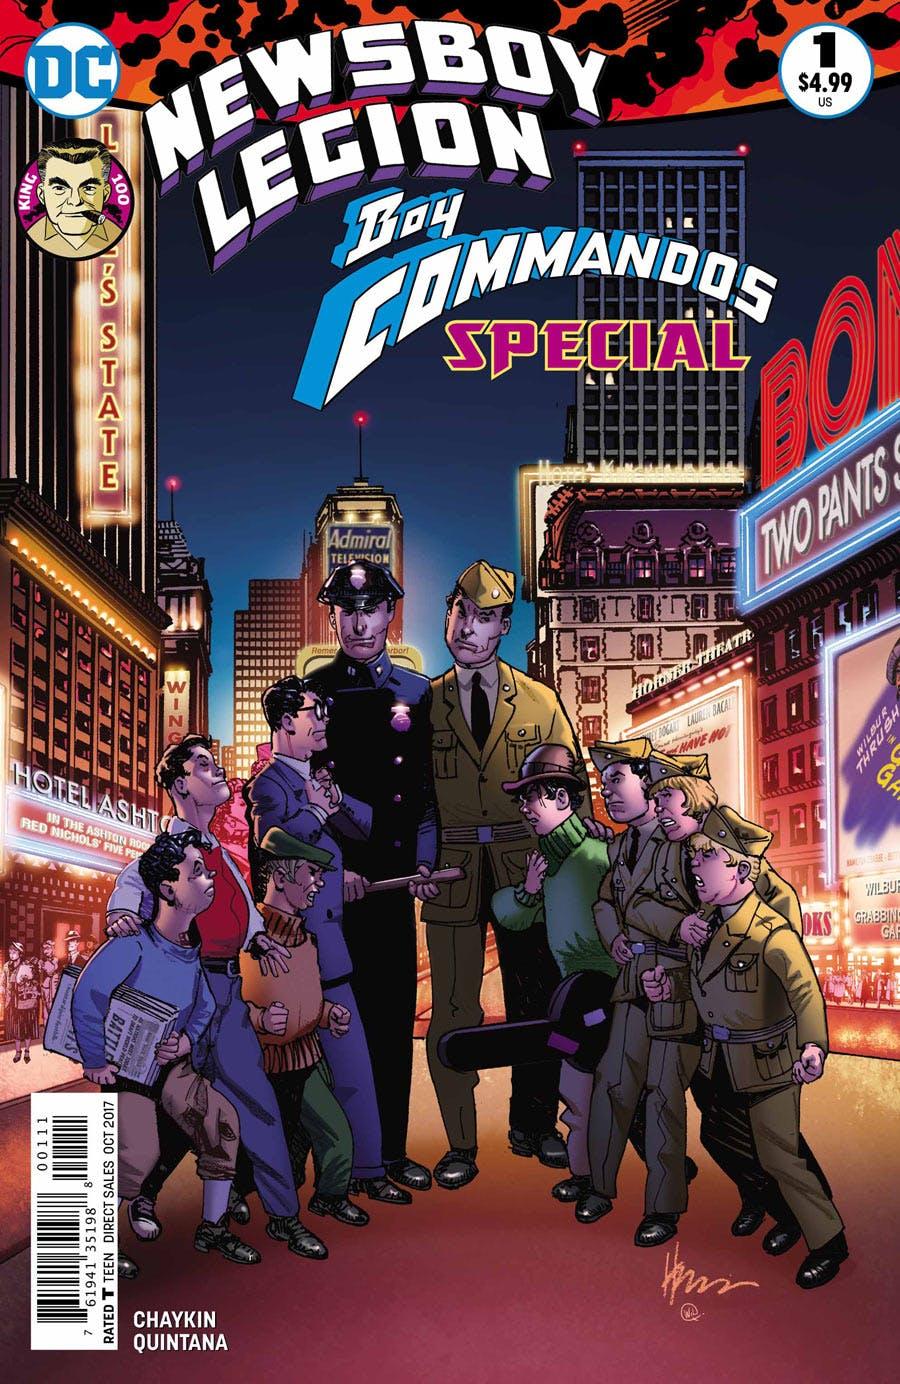 Newsboy Legion/Boy Commandos Special Vol. 1 #1